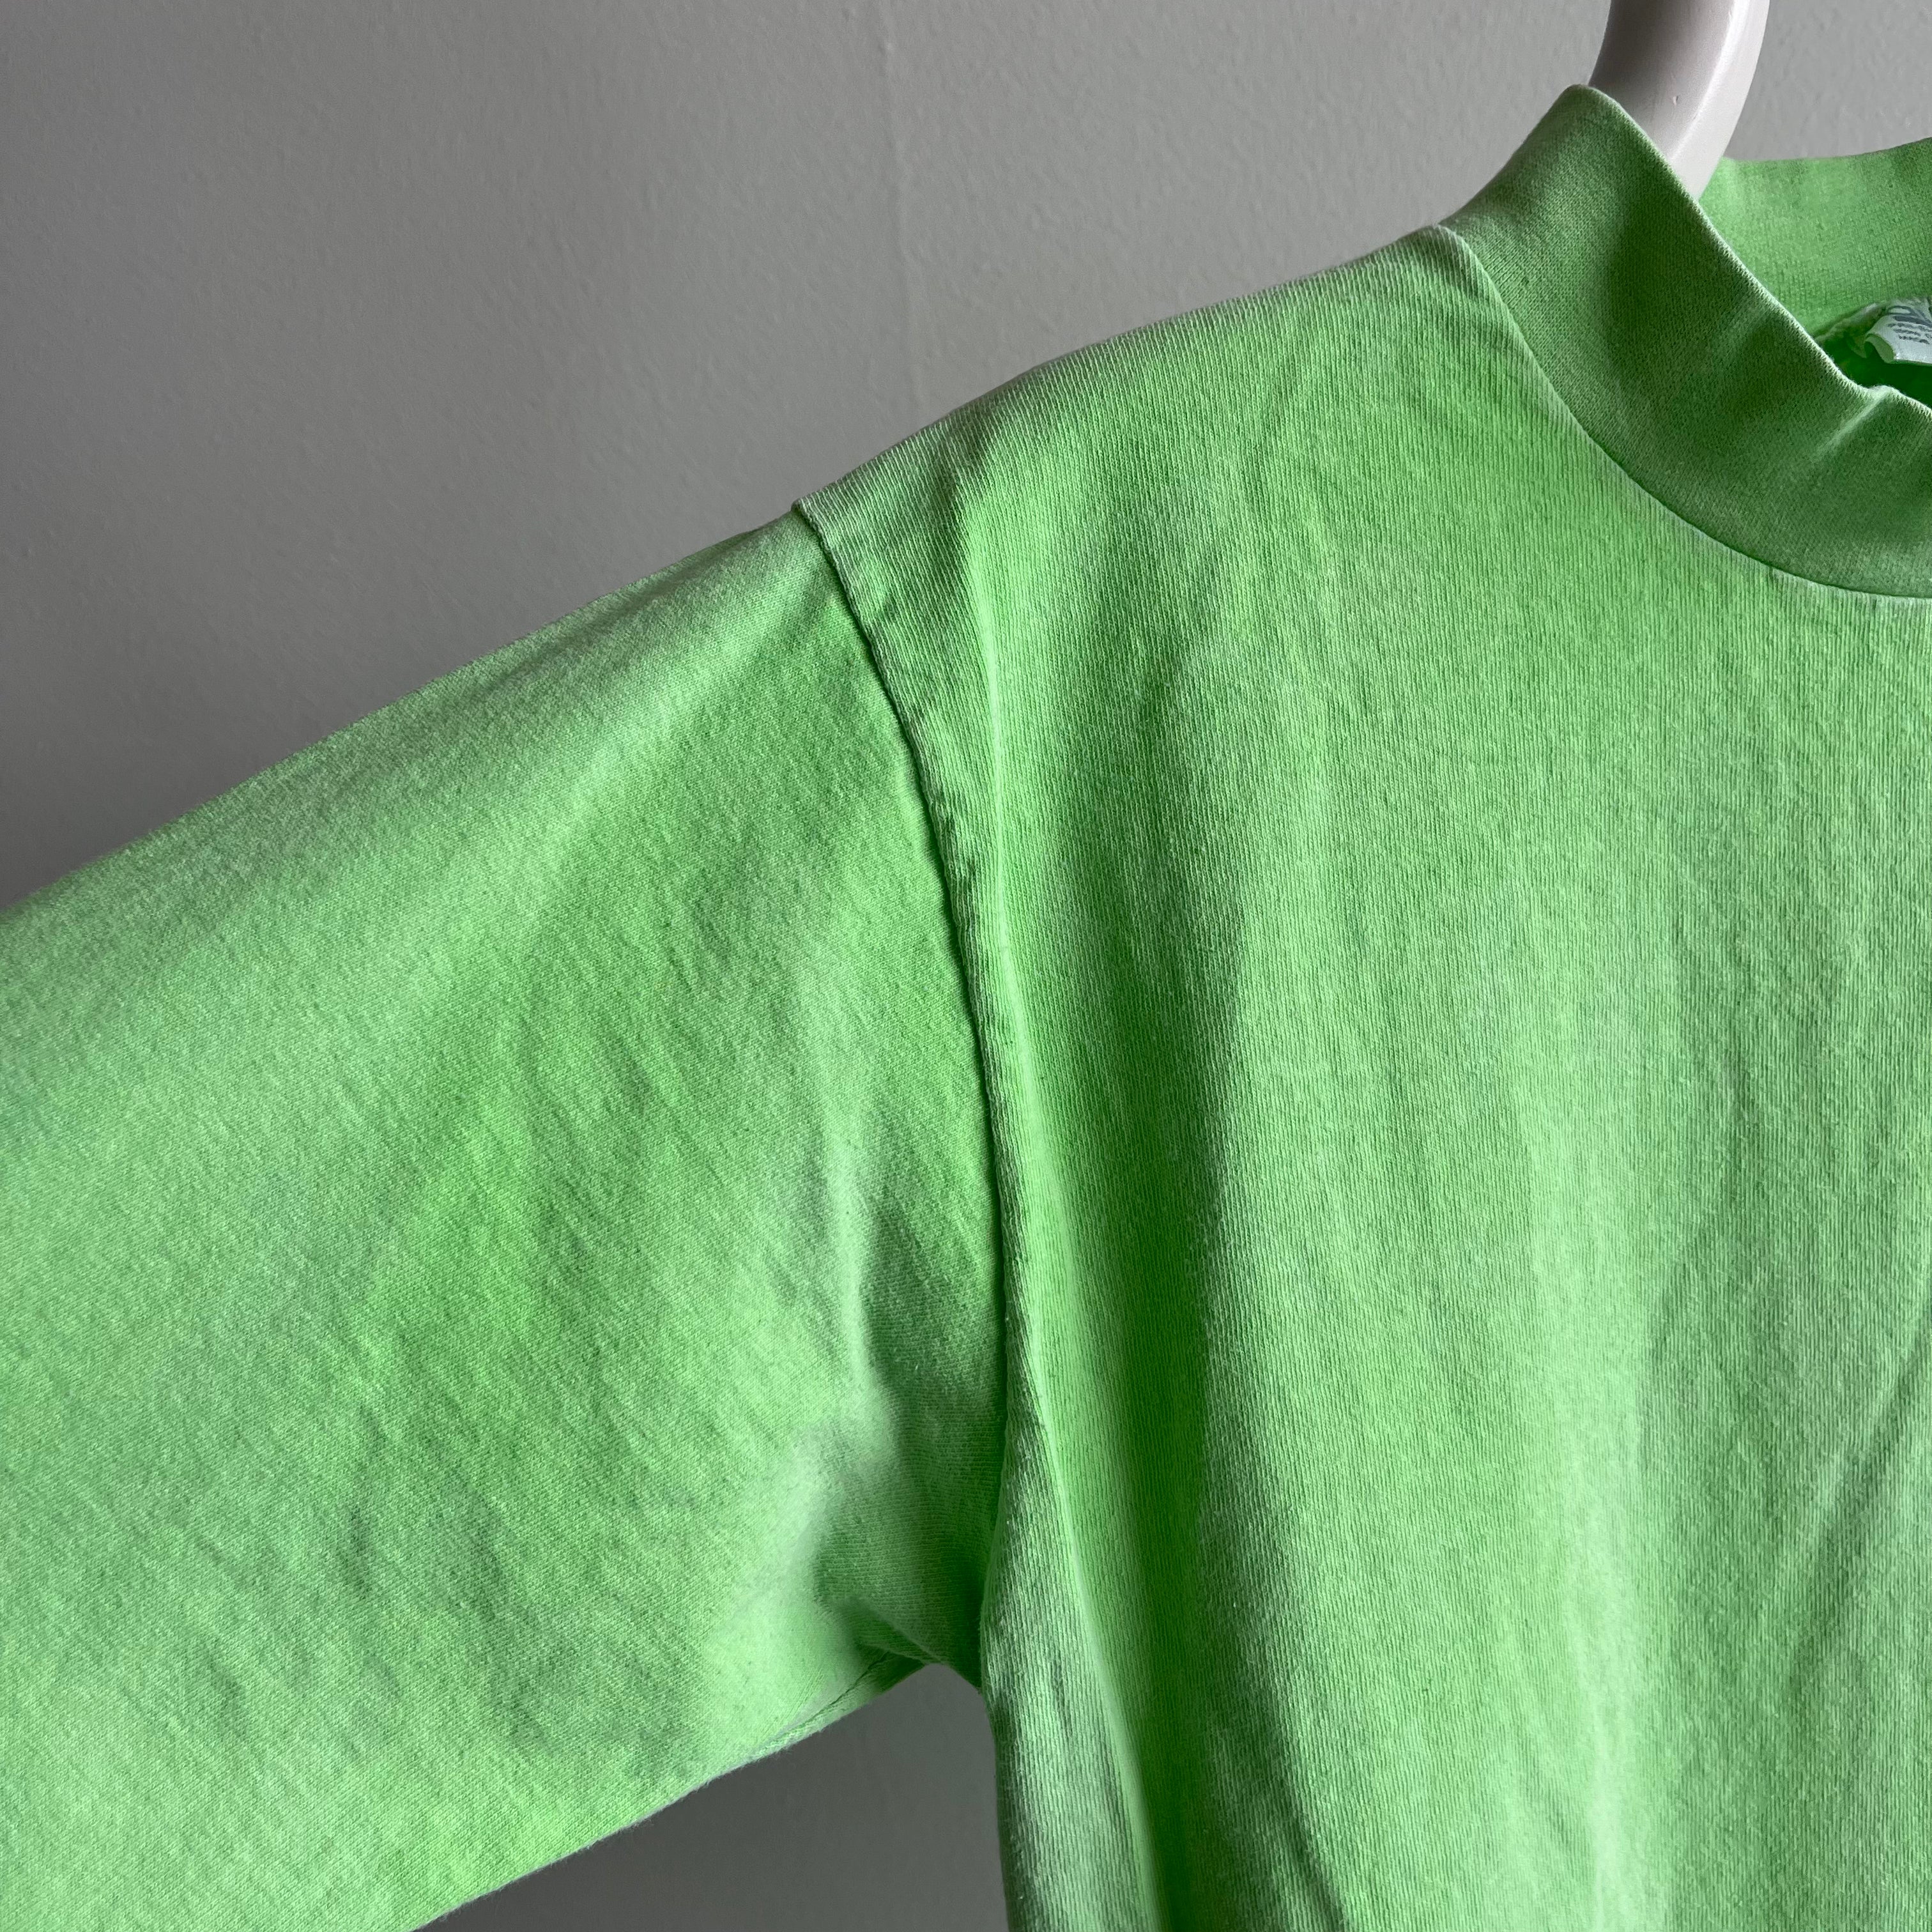 1980s Maui Mock Neck Long Sleeve Neon Green Cotton T-Shirt